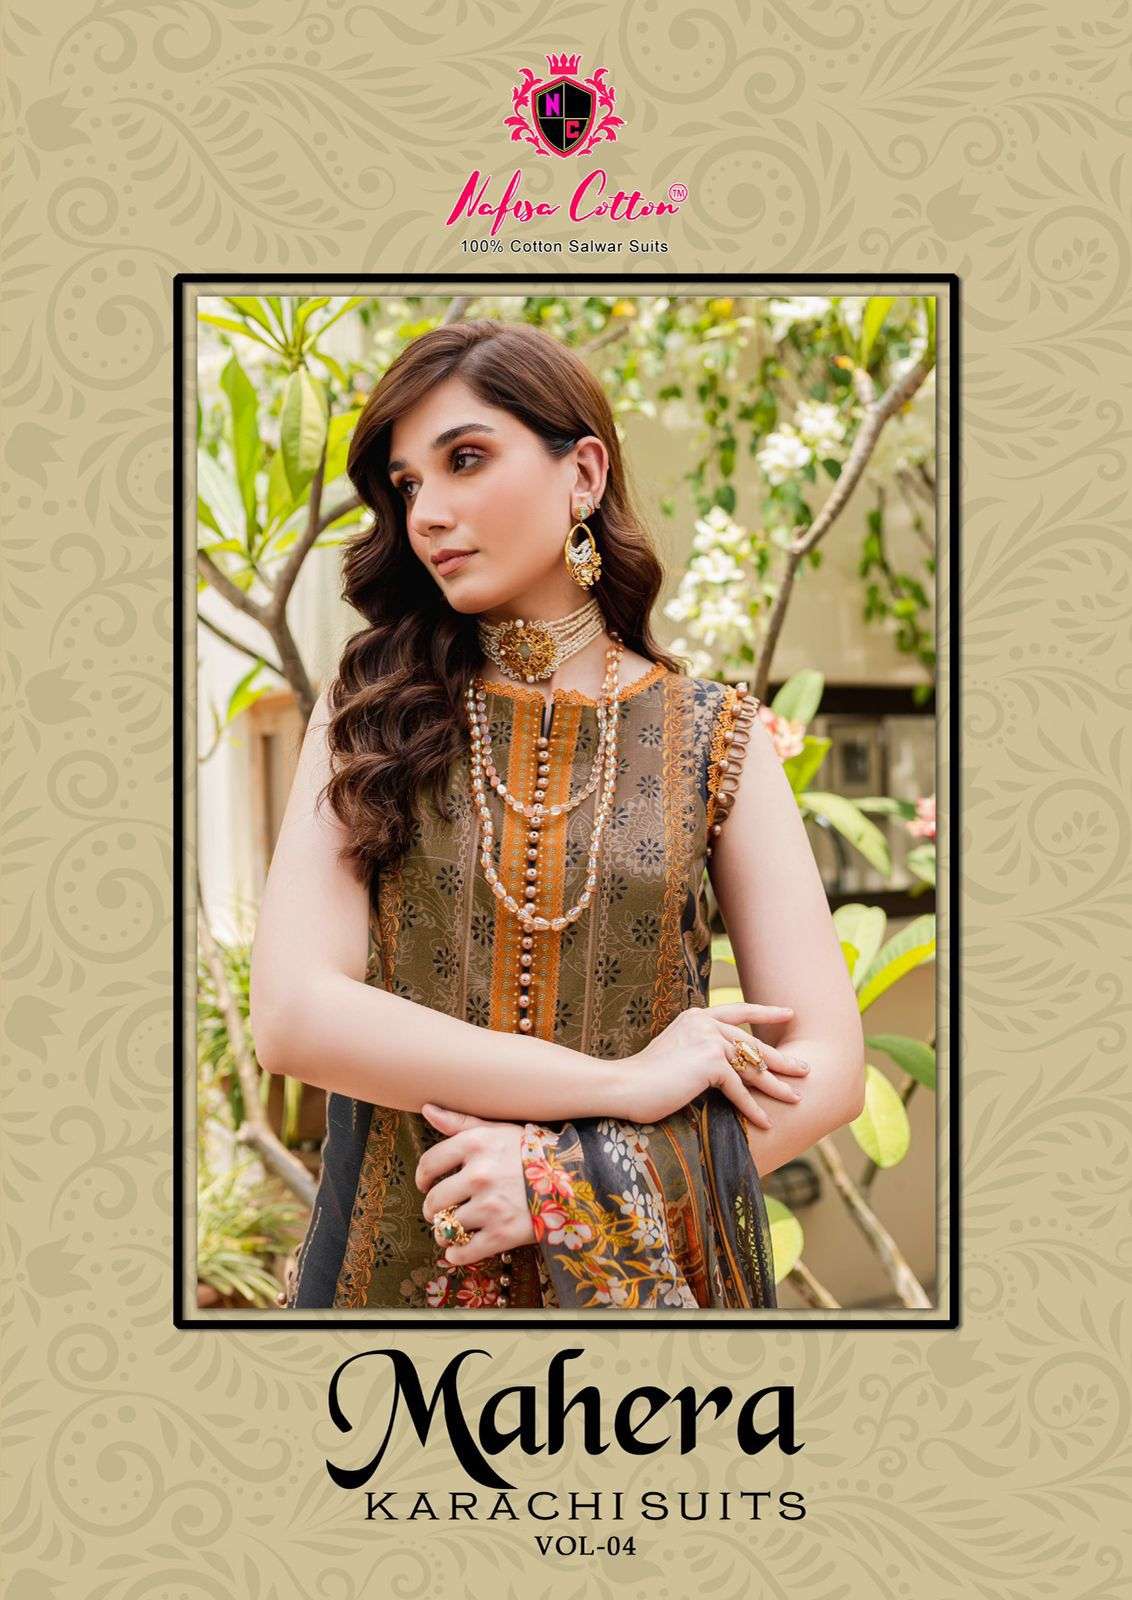 nafisa cotton mahera karachi suits vol-4 4001-4006 series cotton salwar kameez wholesale price surat gujarat